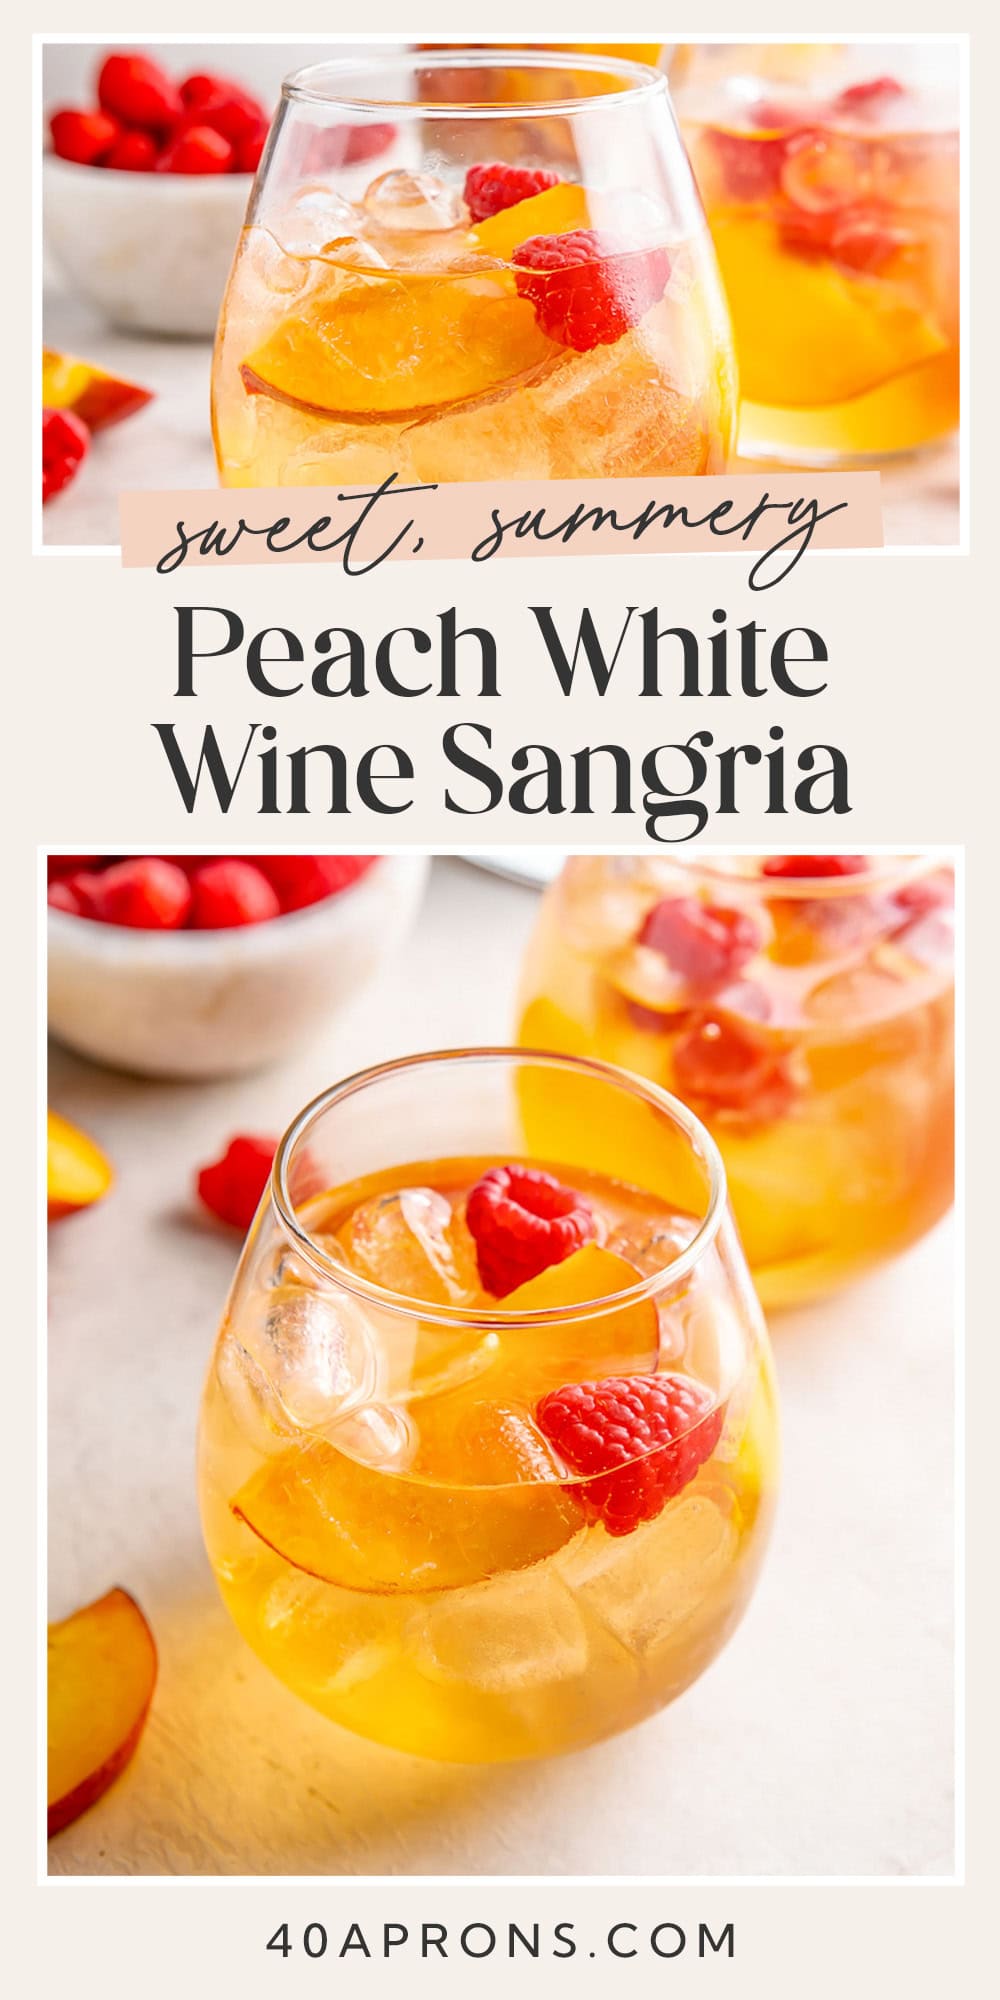 Pin graphic for peach white wine sangria.